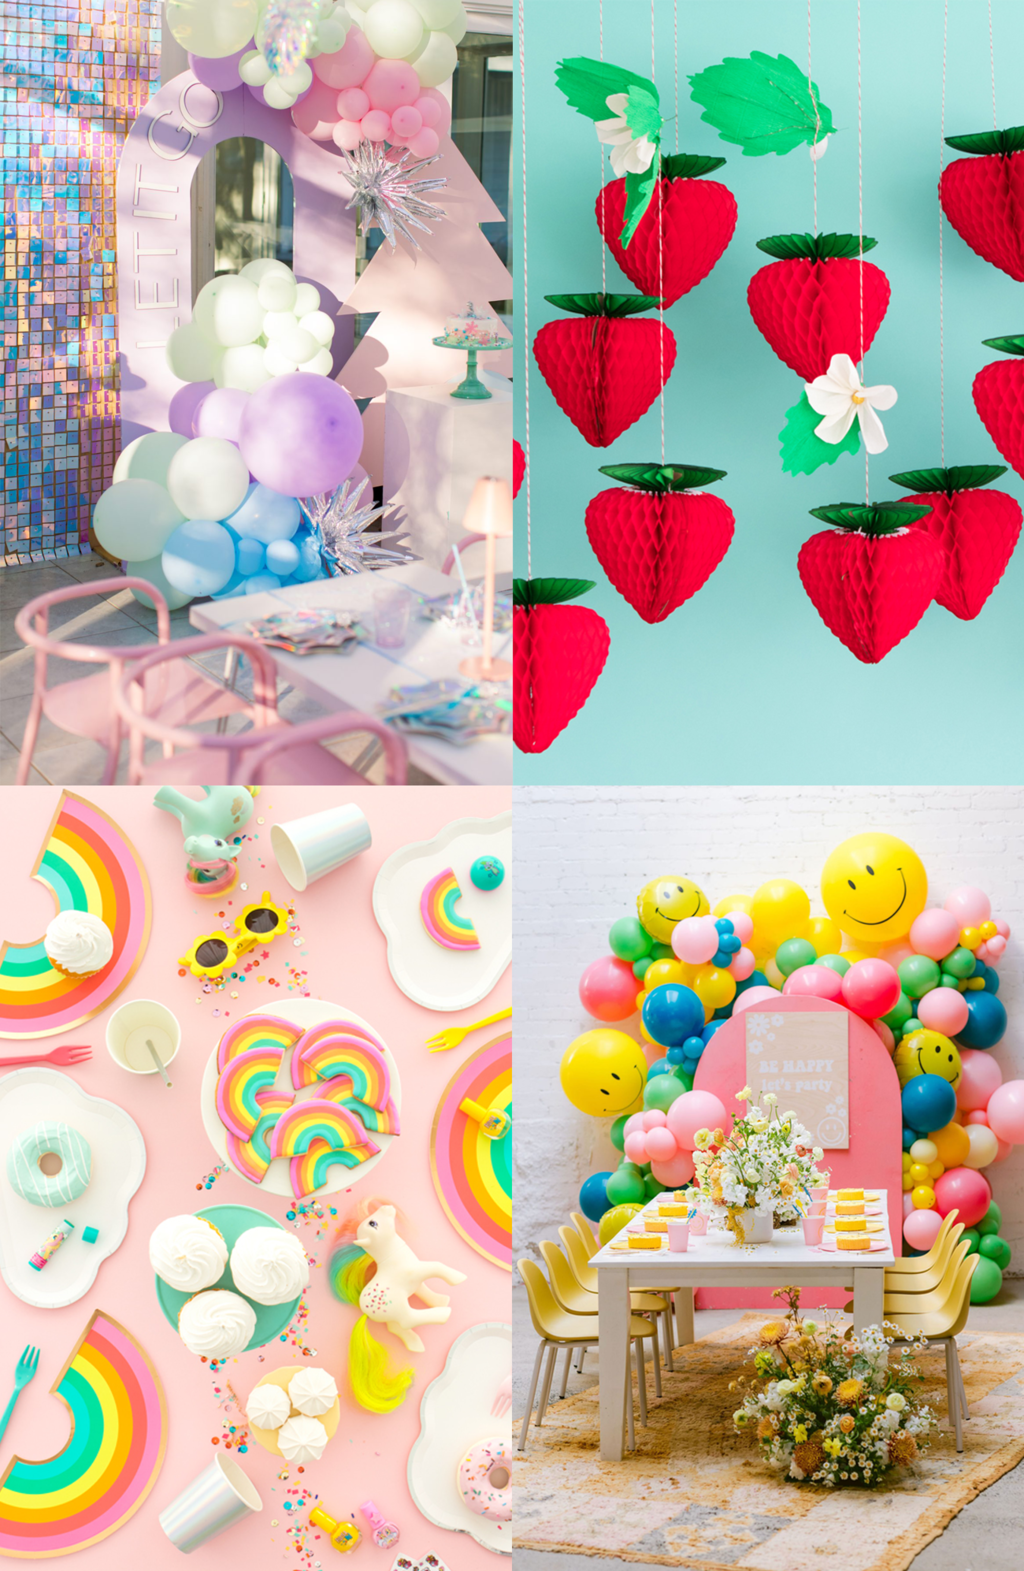 Creative & Fun Girls’ Birthday Party Ideas to Inspire You